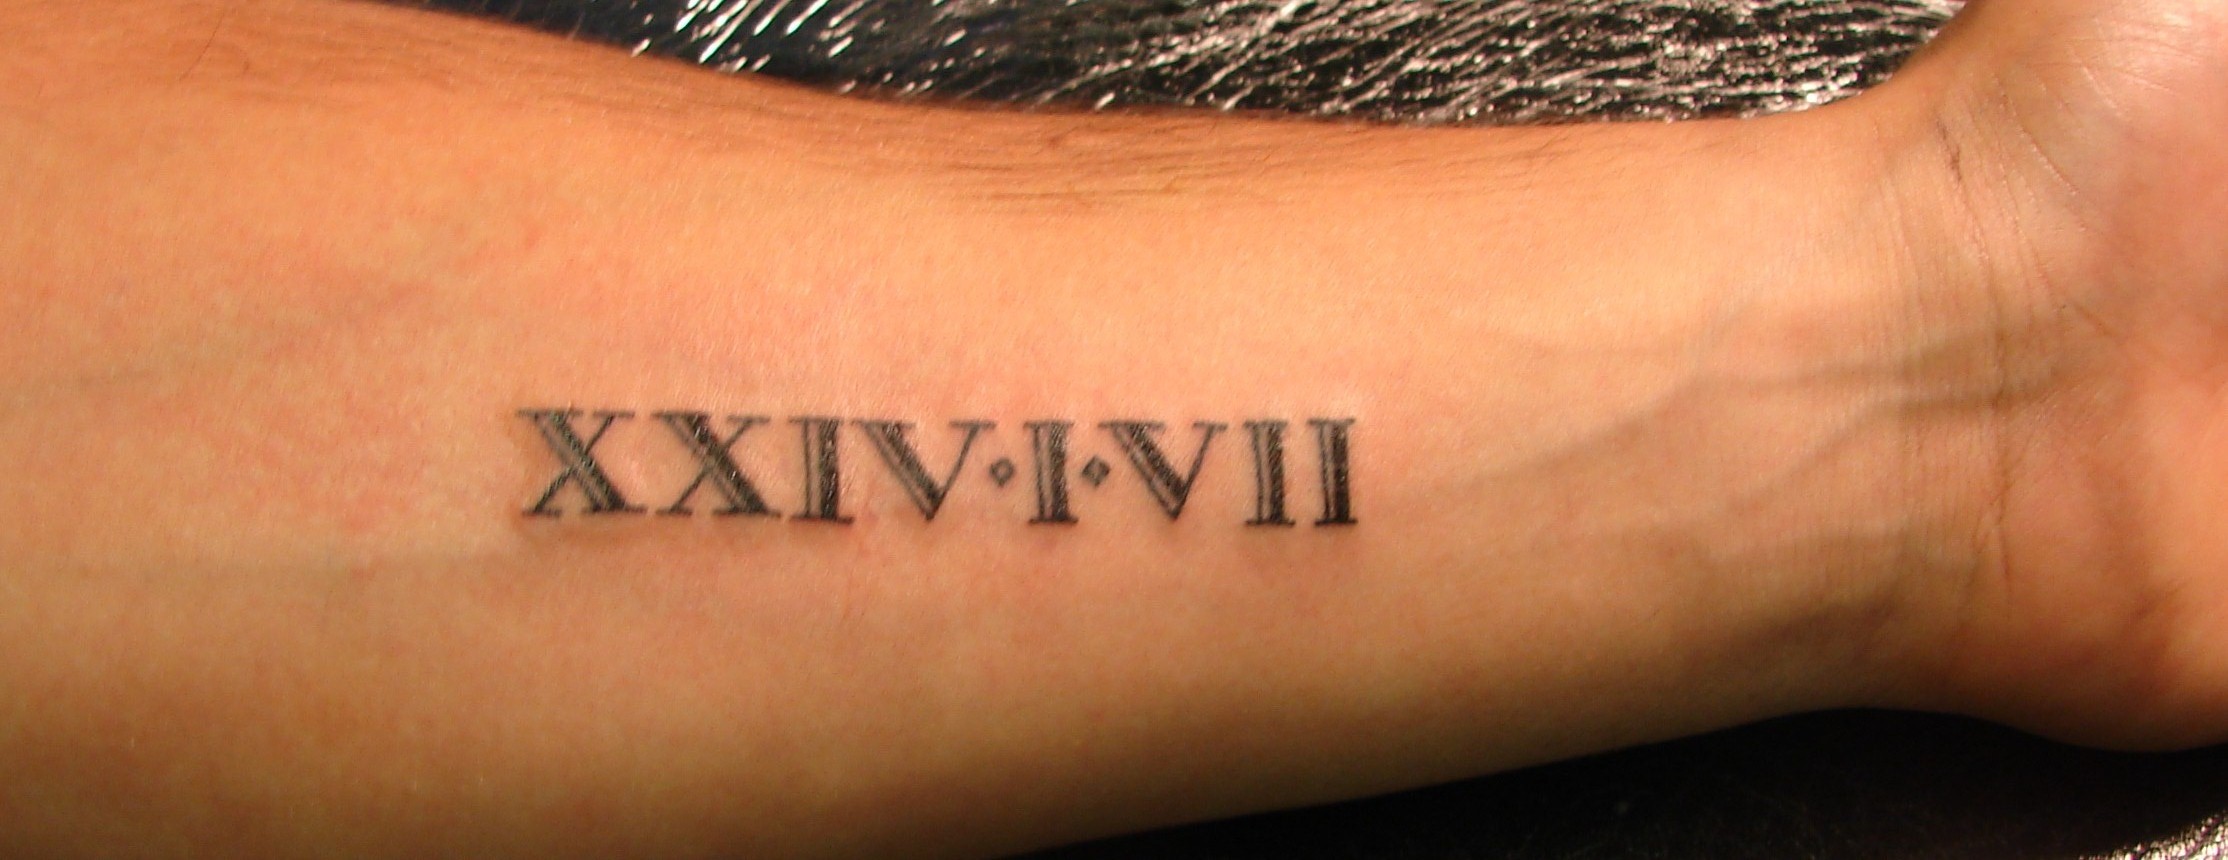 8. Roman Numeral Tattoo Ideas for Anniversaries - wide 6